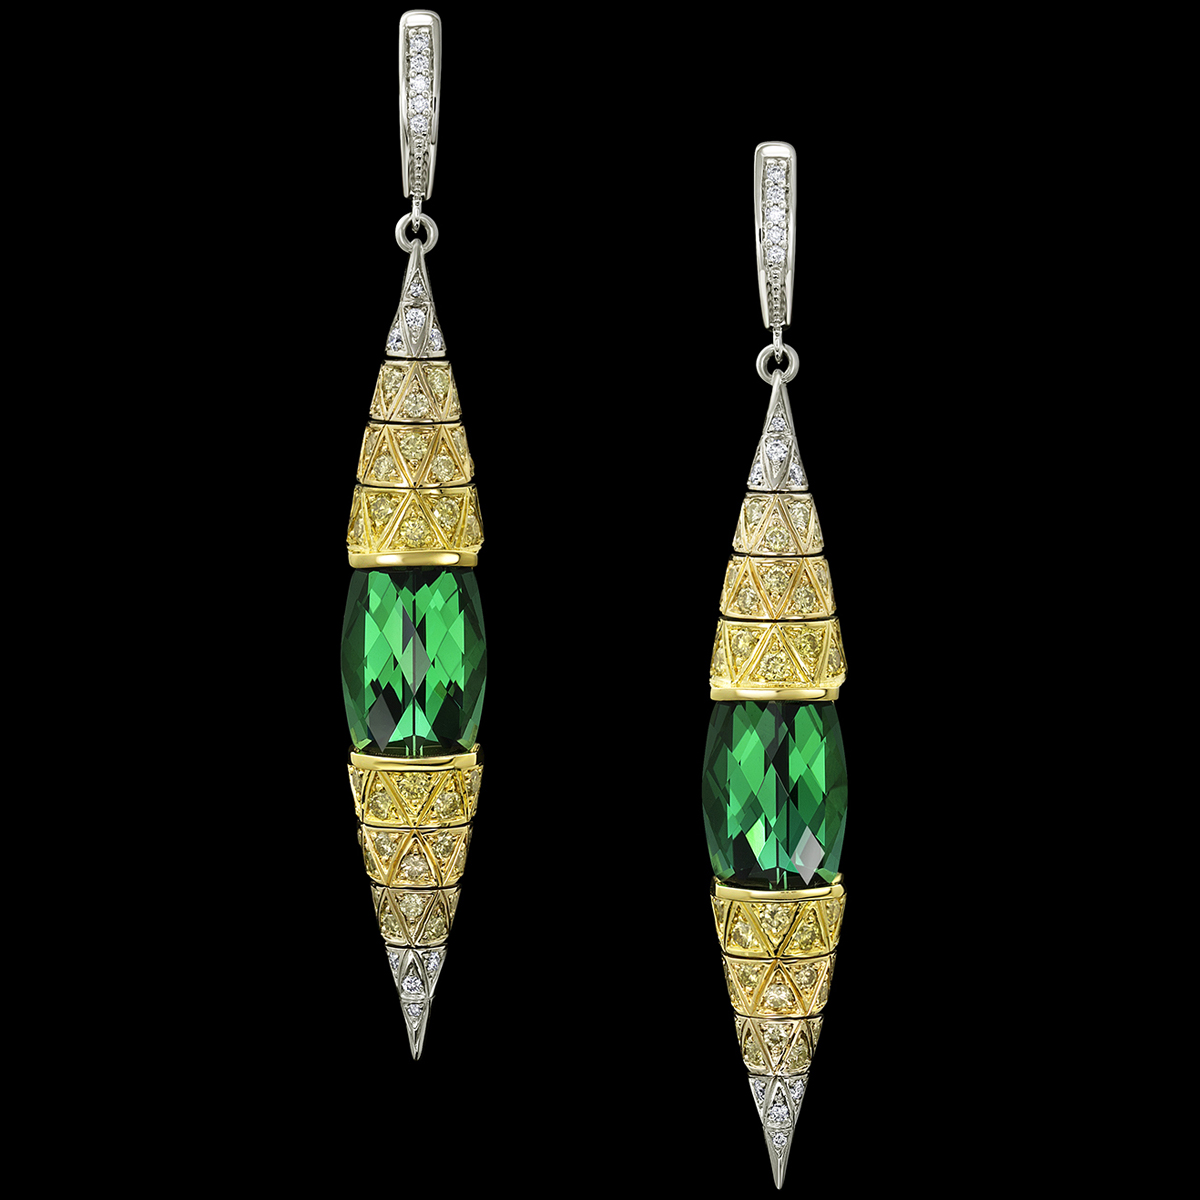 Arlequin Earrings Green Tourmaline